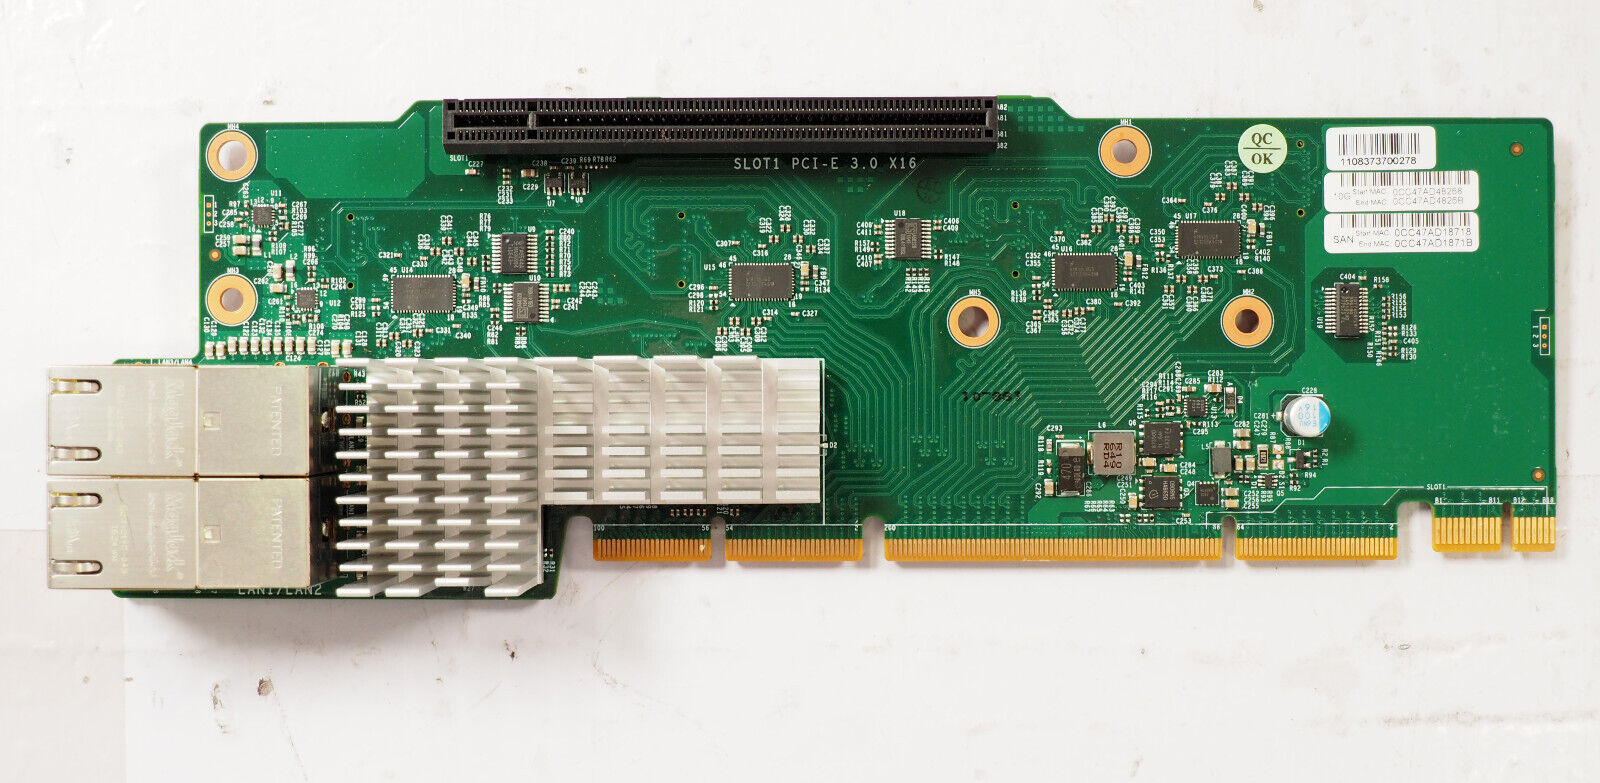 Supermicro AOC-2UR6N4-i4XT Intel 10Gbase-T PCIe 3.0 X16 Network Adapter